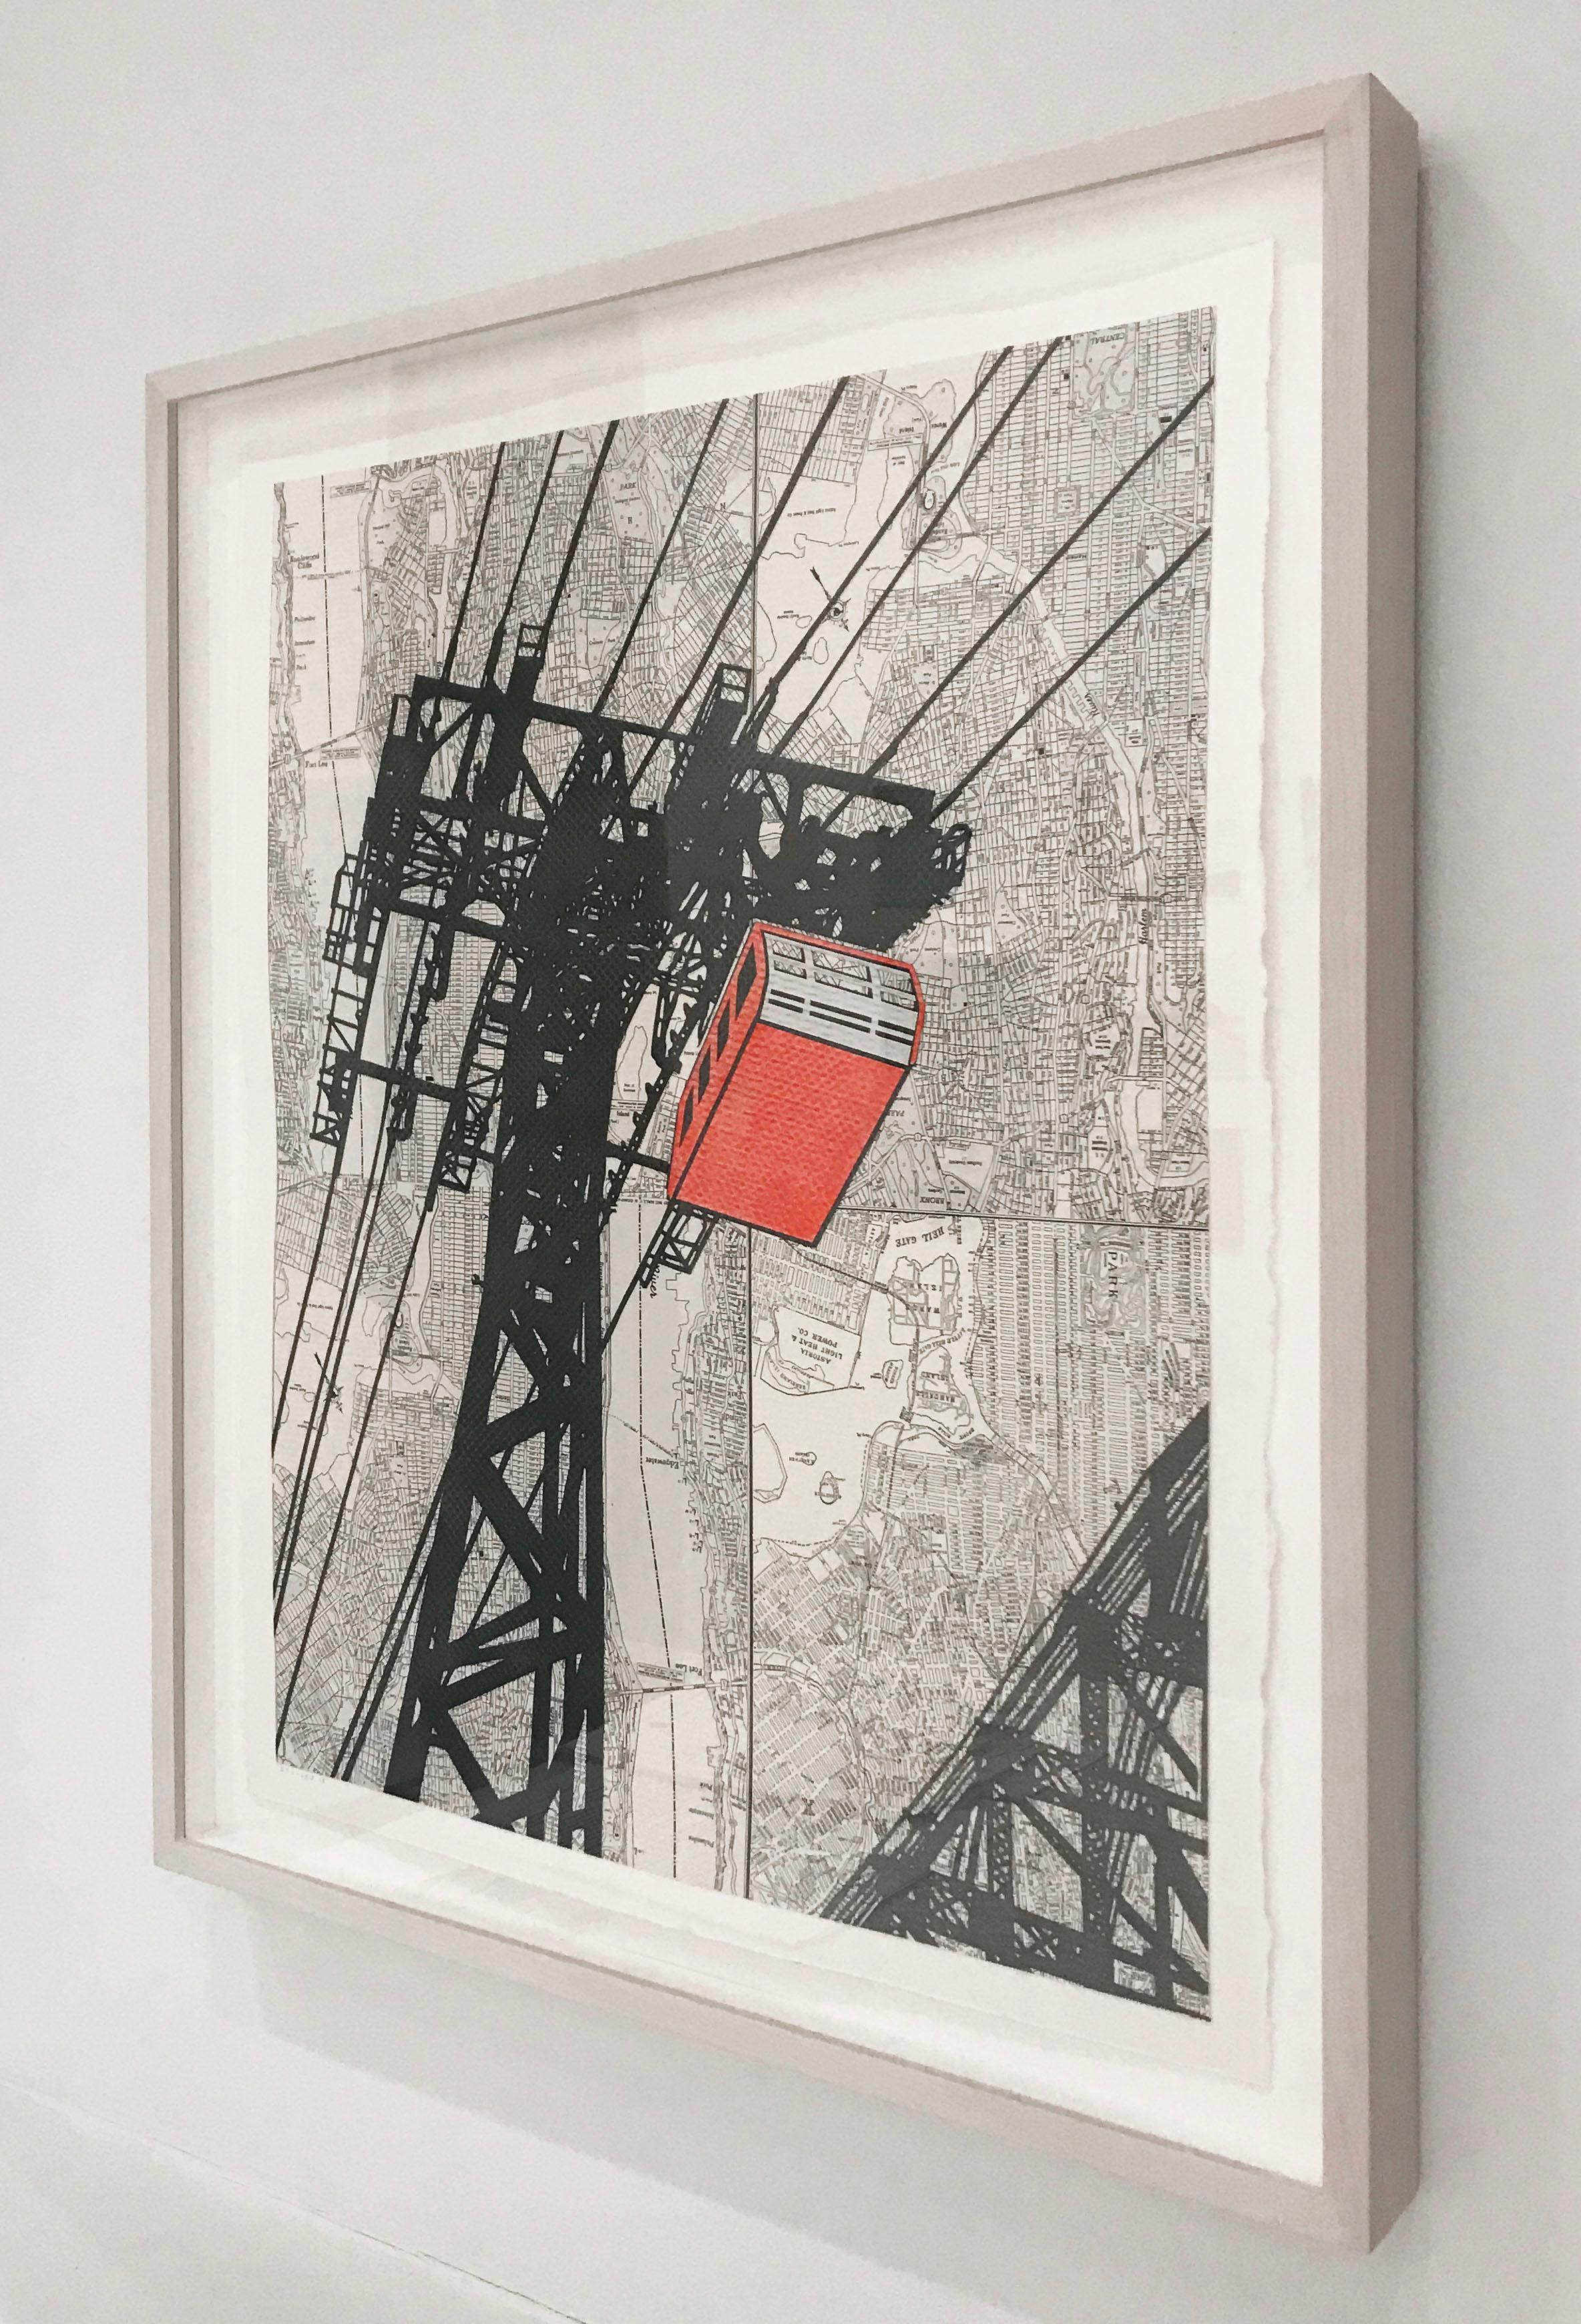 Roosevelt Island Tram - Contemporary Mixed Media Art by William Steiger